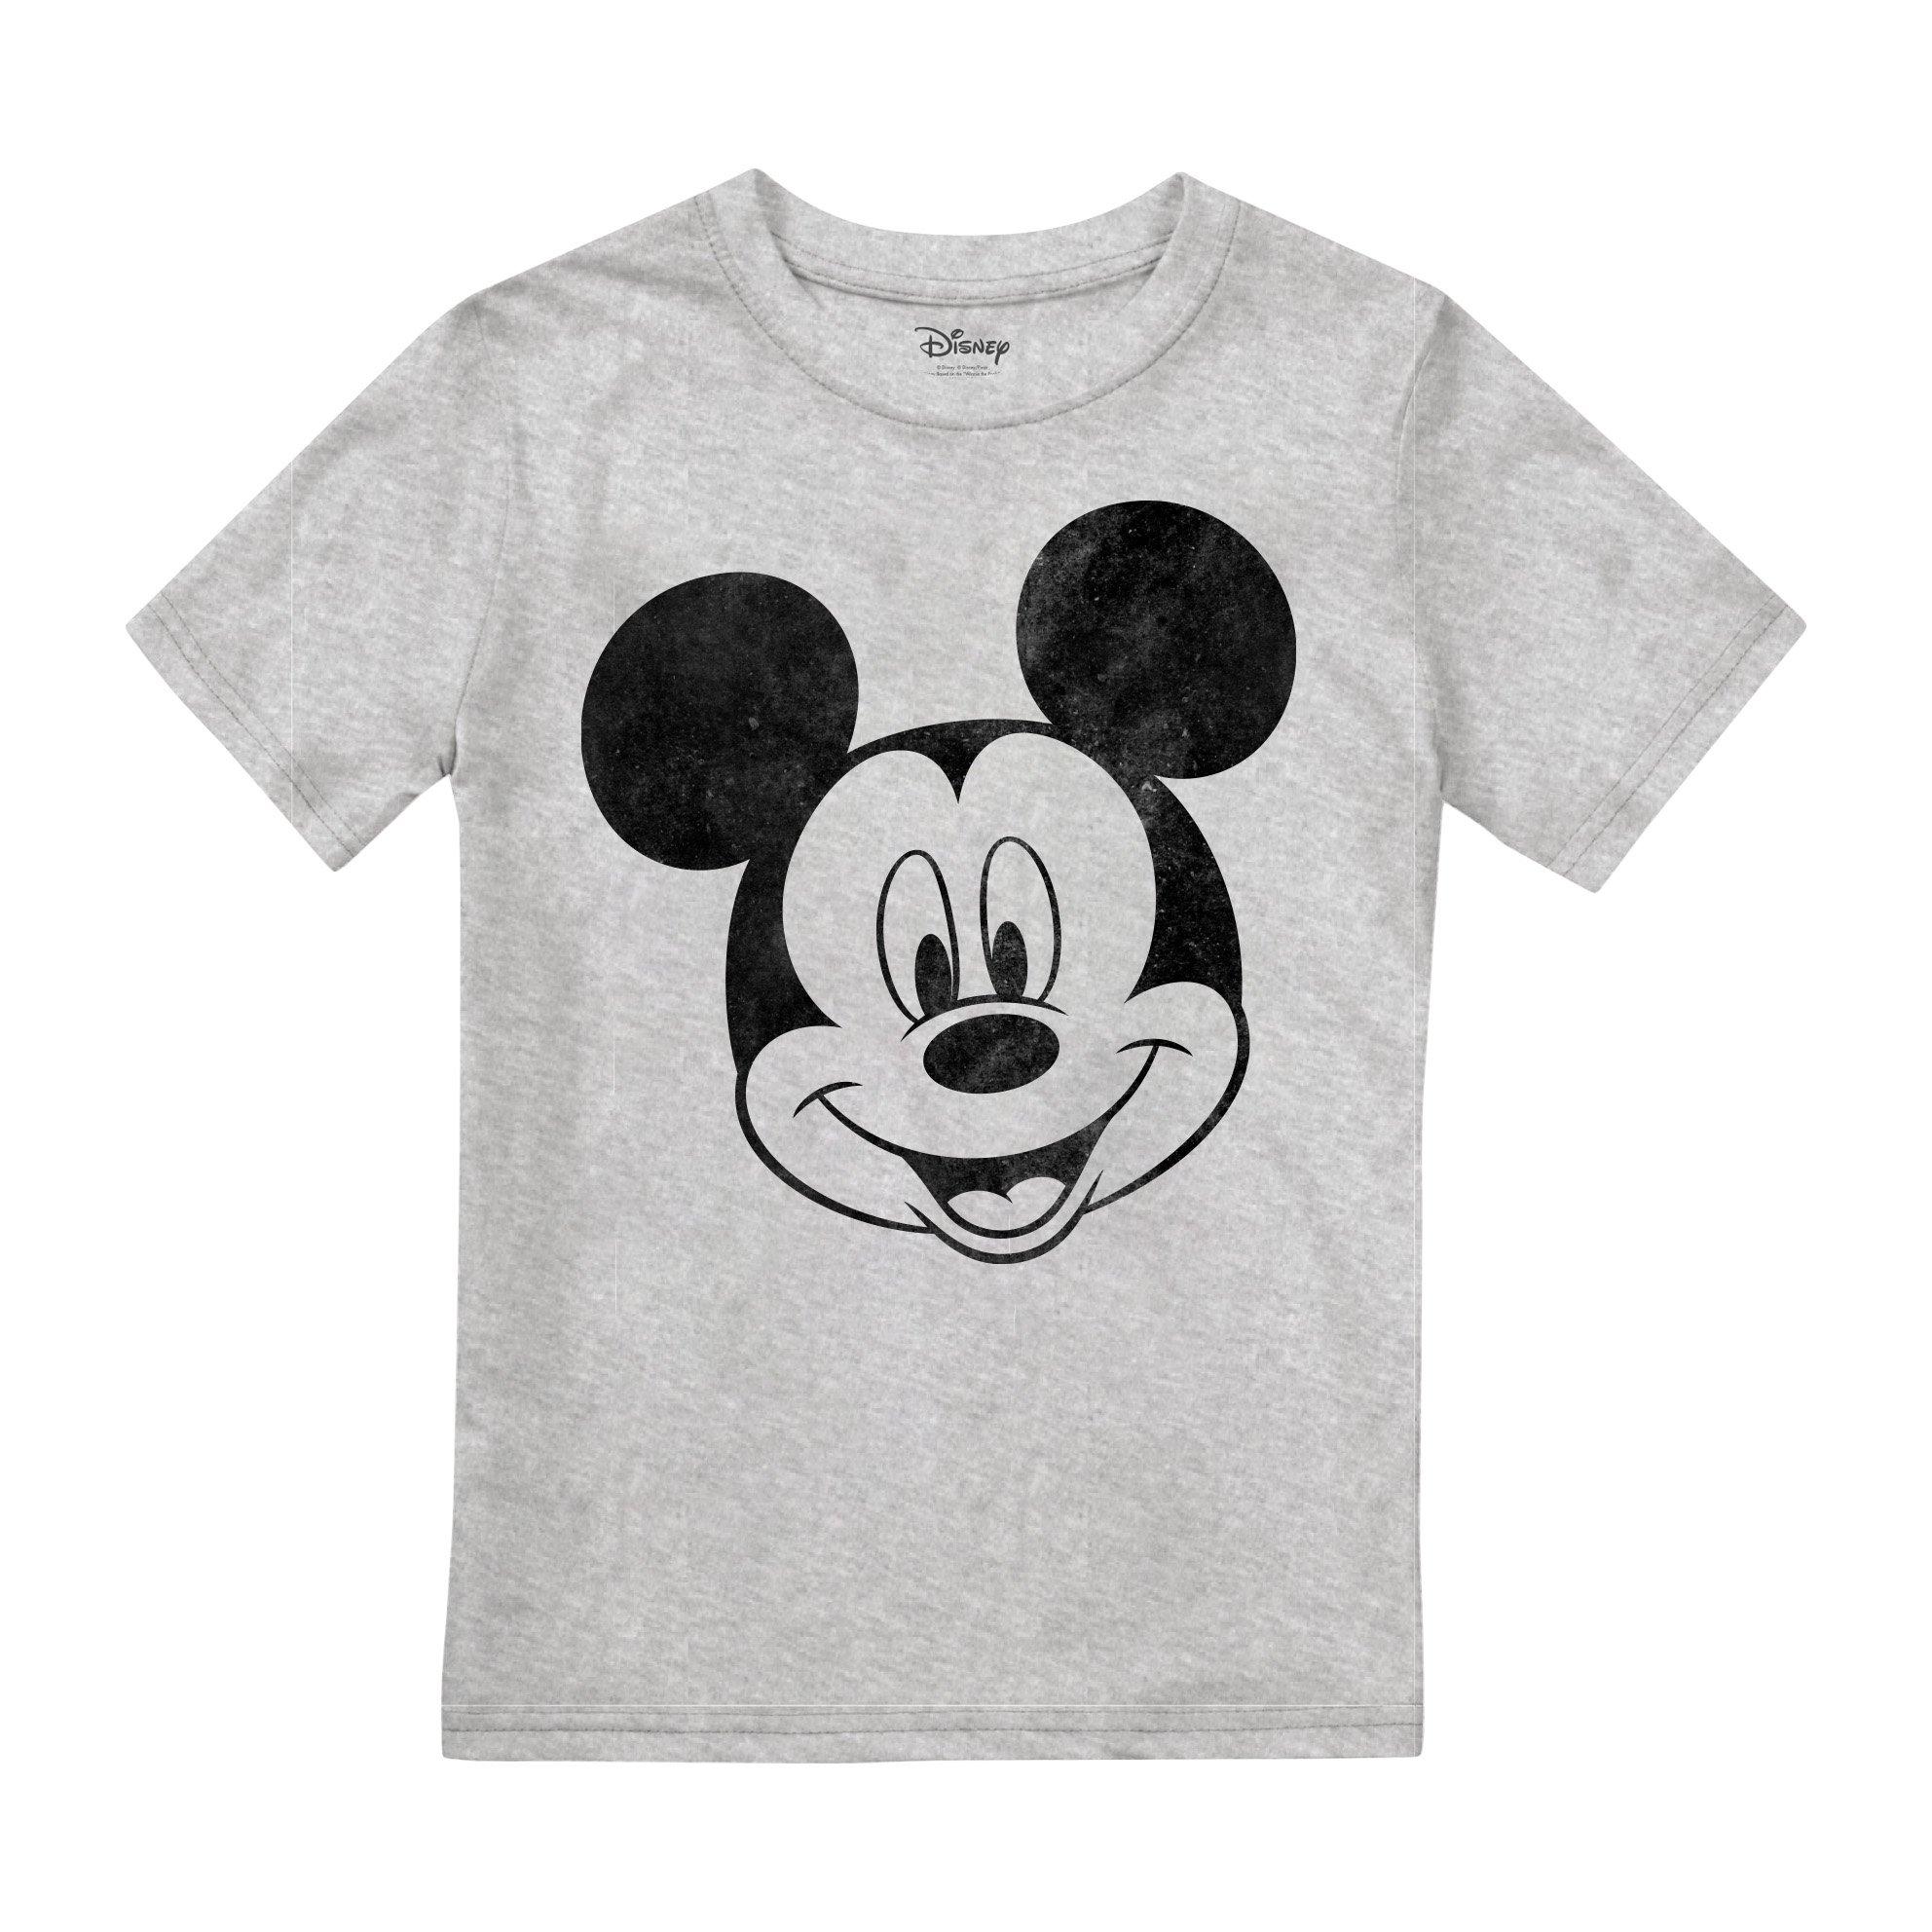 Однотонная футболка с Микки Маусом Disney, серый детский конструктор hello kitty микки и минни маус